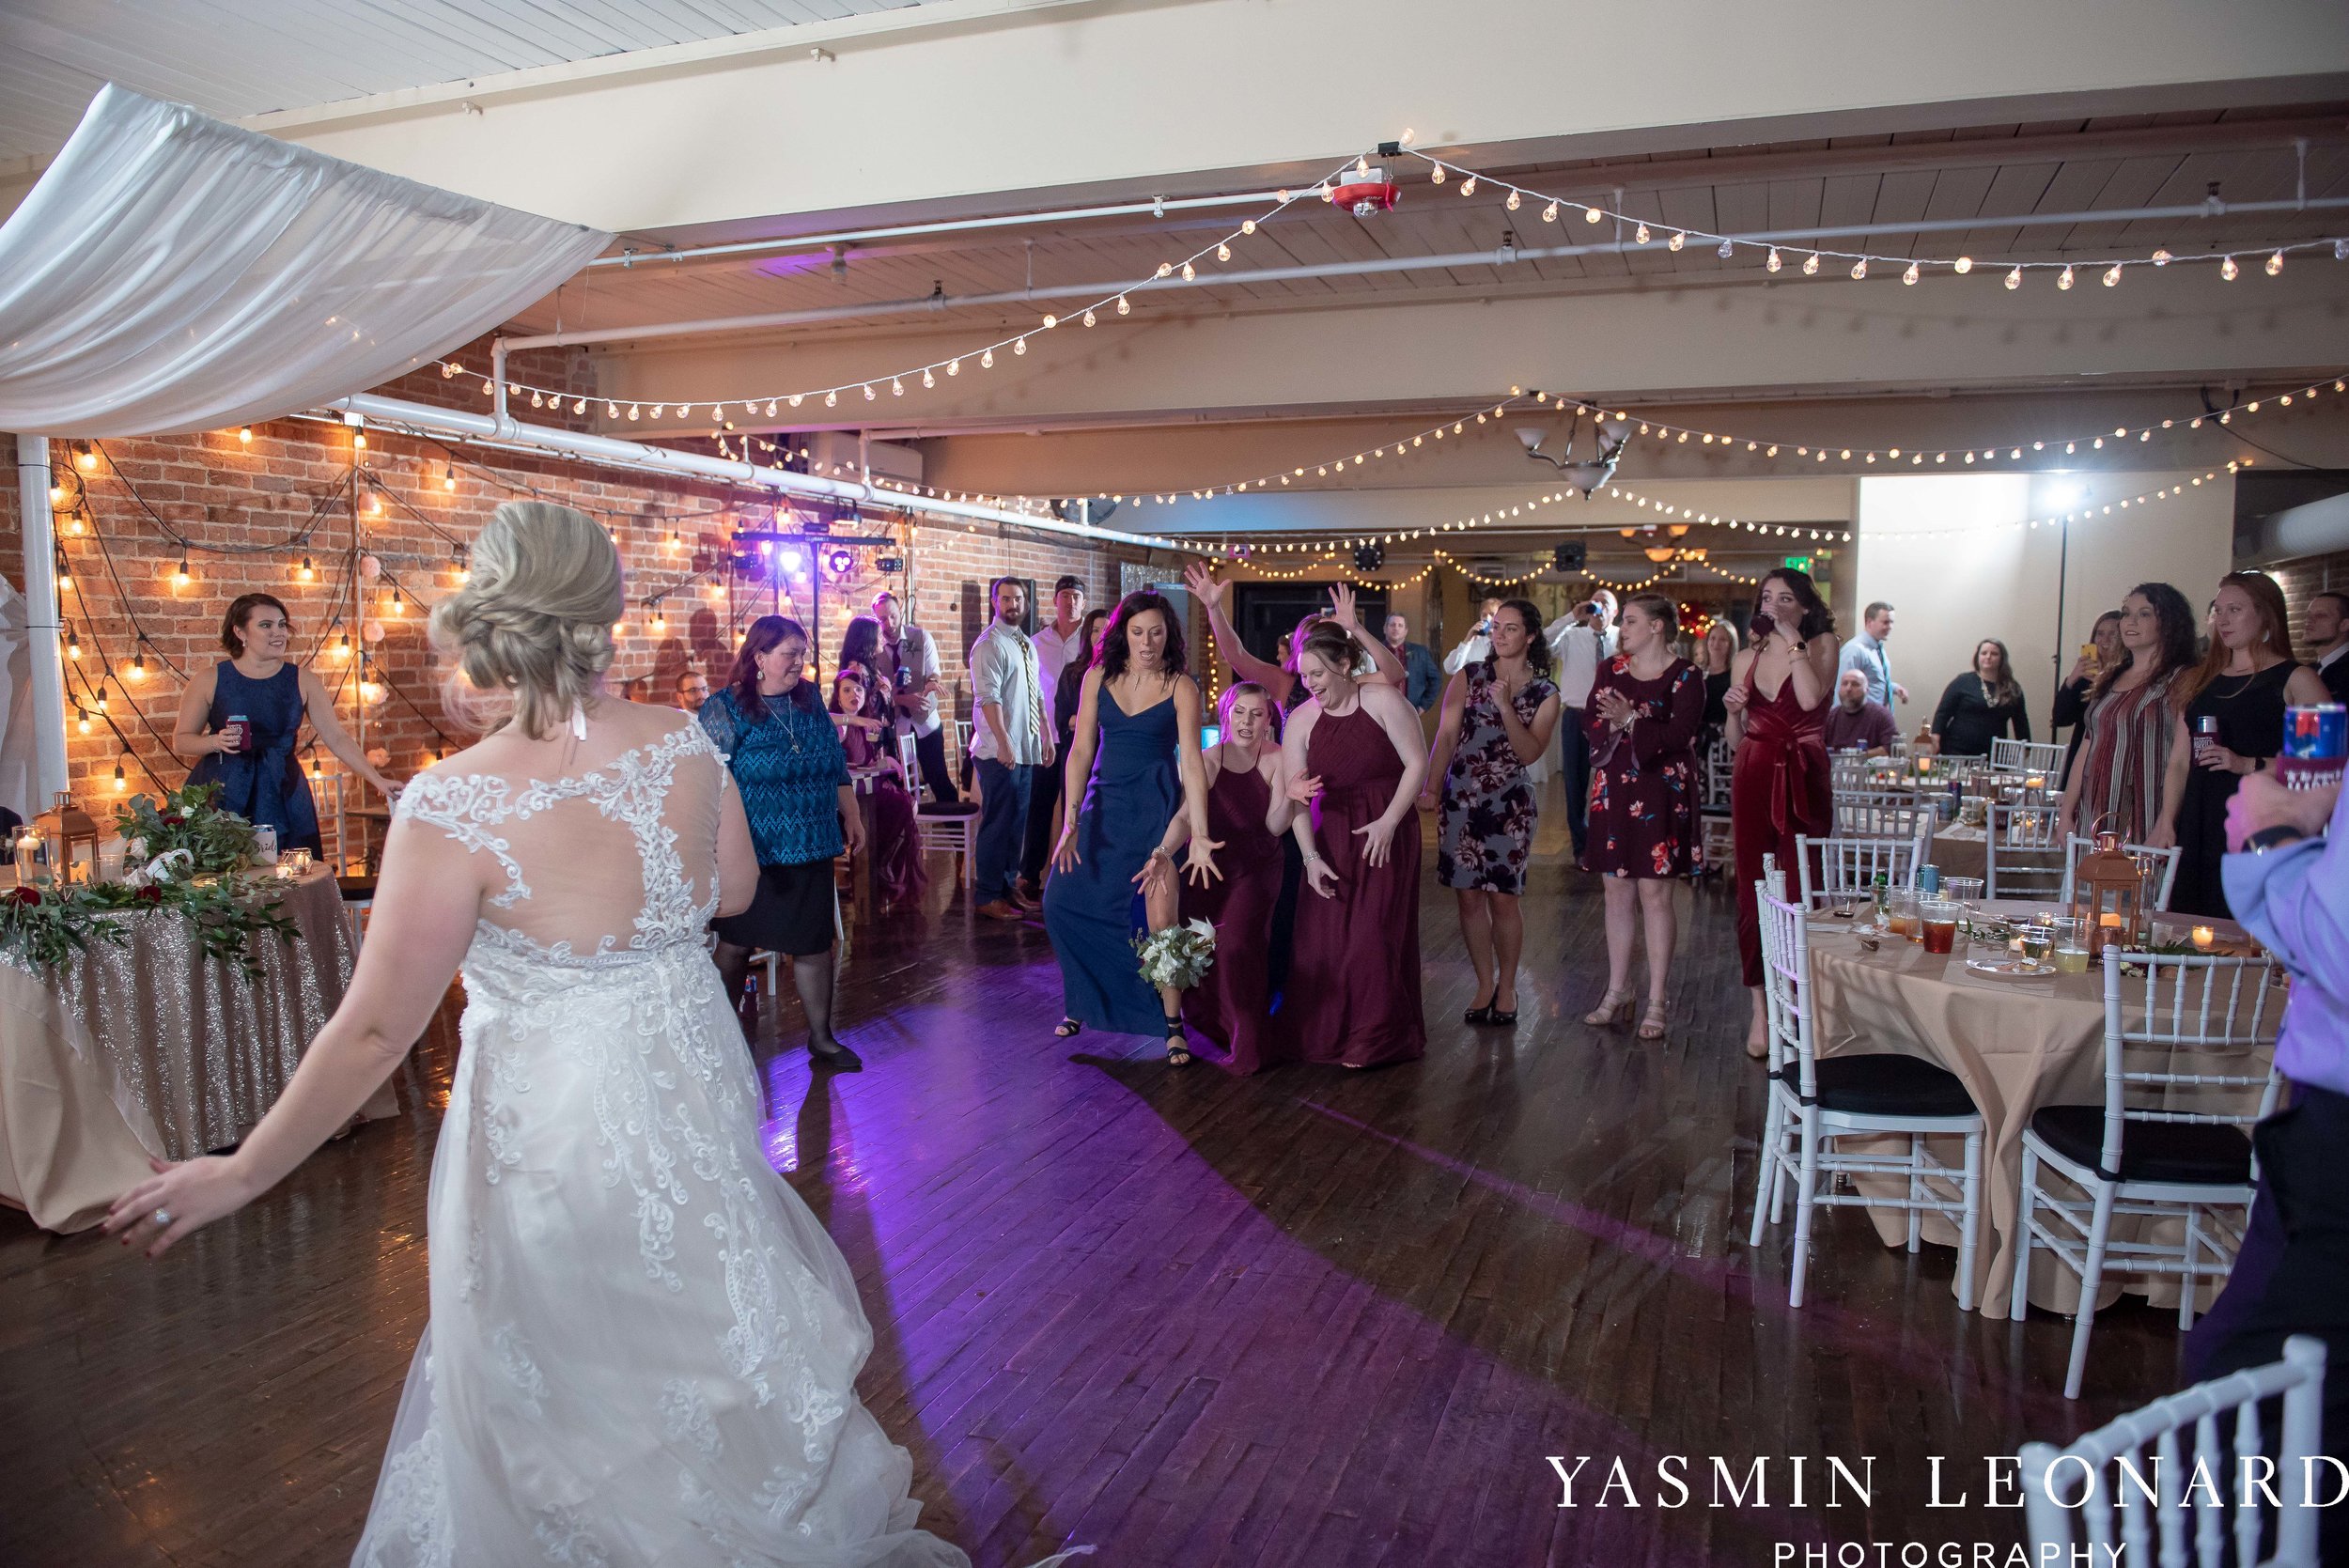 Rebekah and Matt - 105 Worth Event Centre - Yasmin Leonard Photography - Asheboro Wedding - NC Wedding - High Point Weddings - Triad Weddings - Winter Wedding-66.jpg